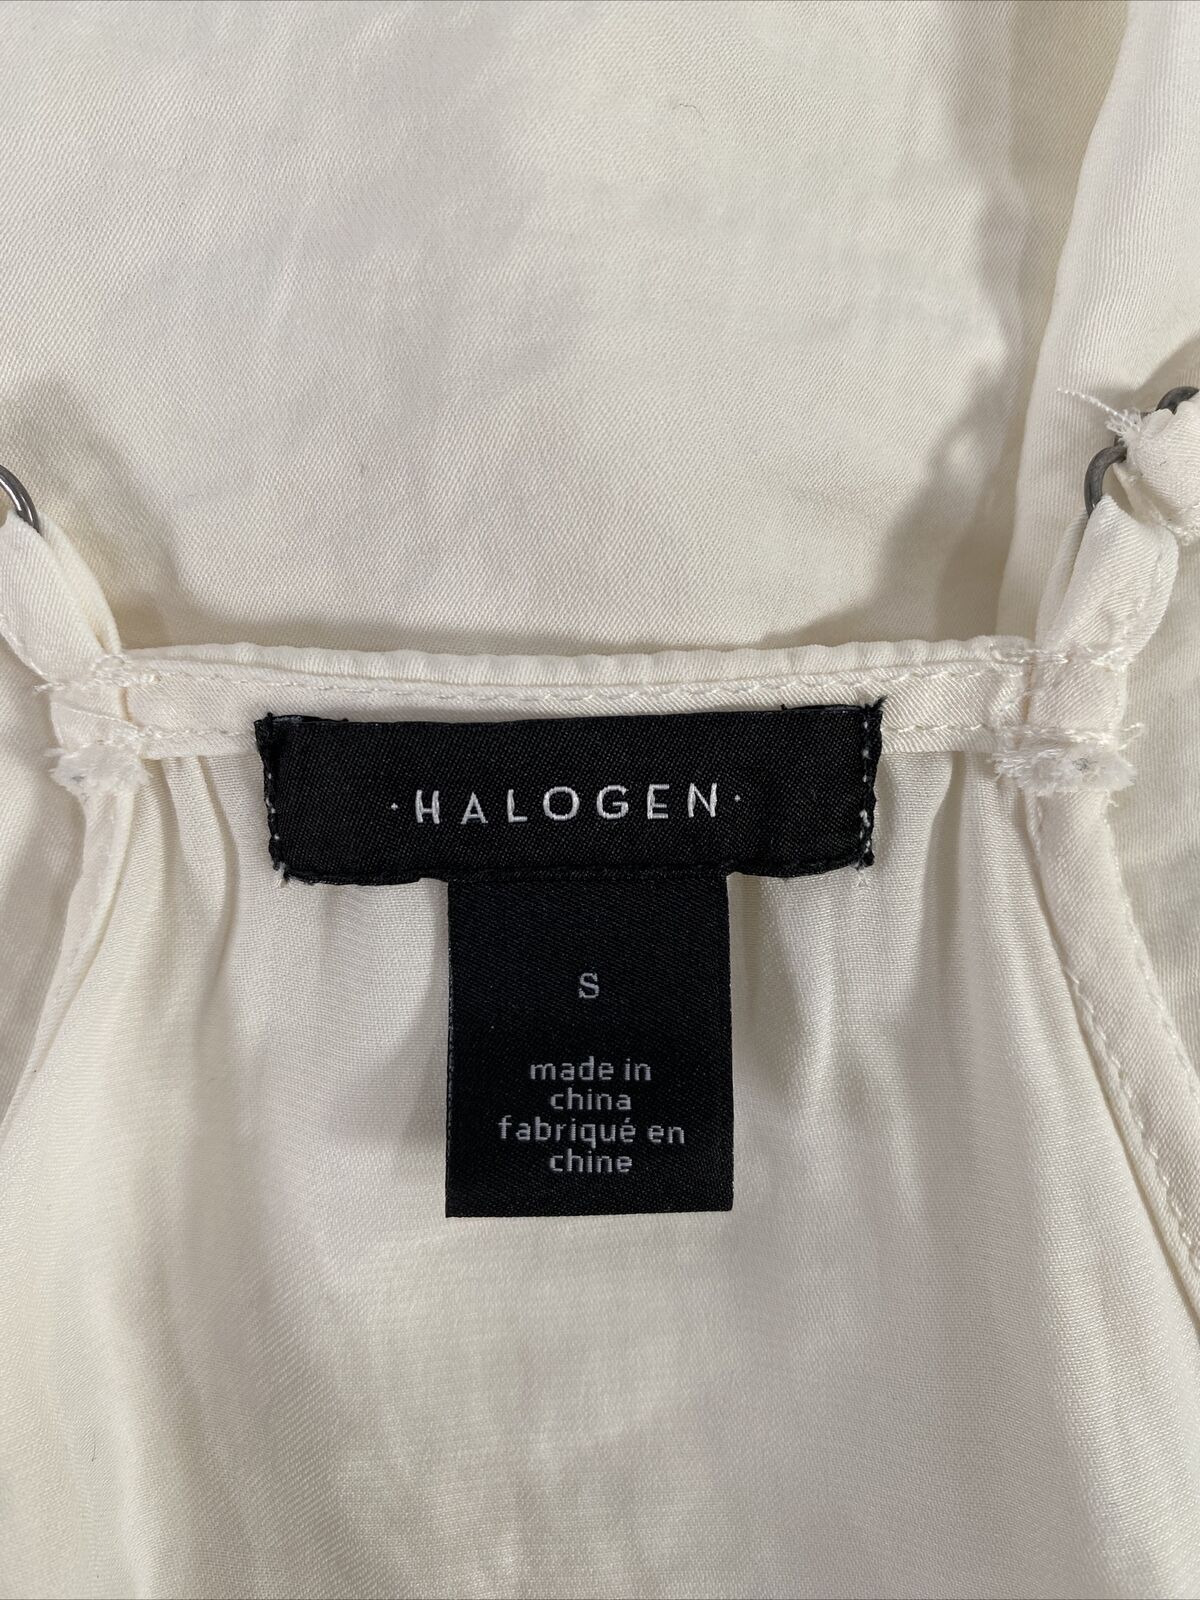 Halogen Women's Ivory/White Sleeveless Lace Trim Tank Top - S